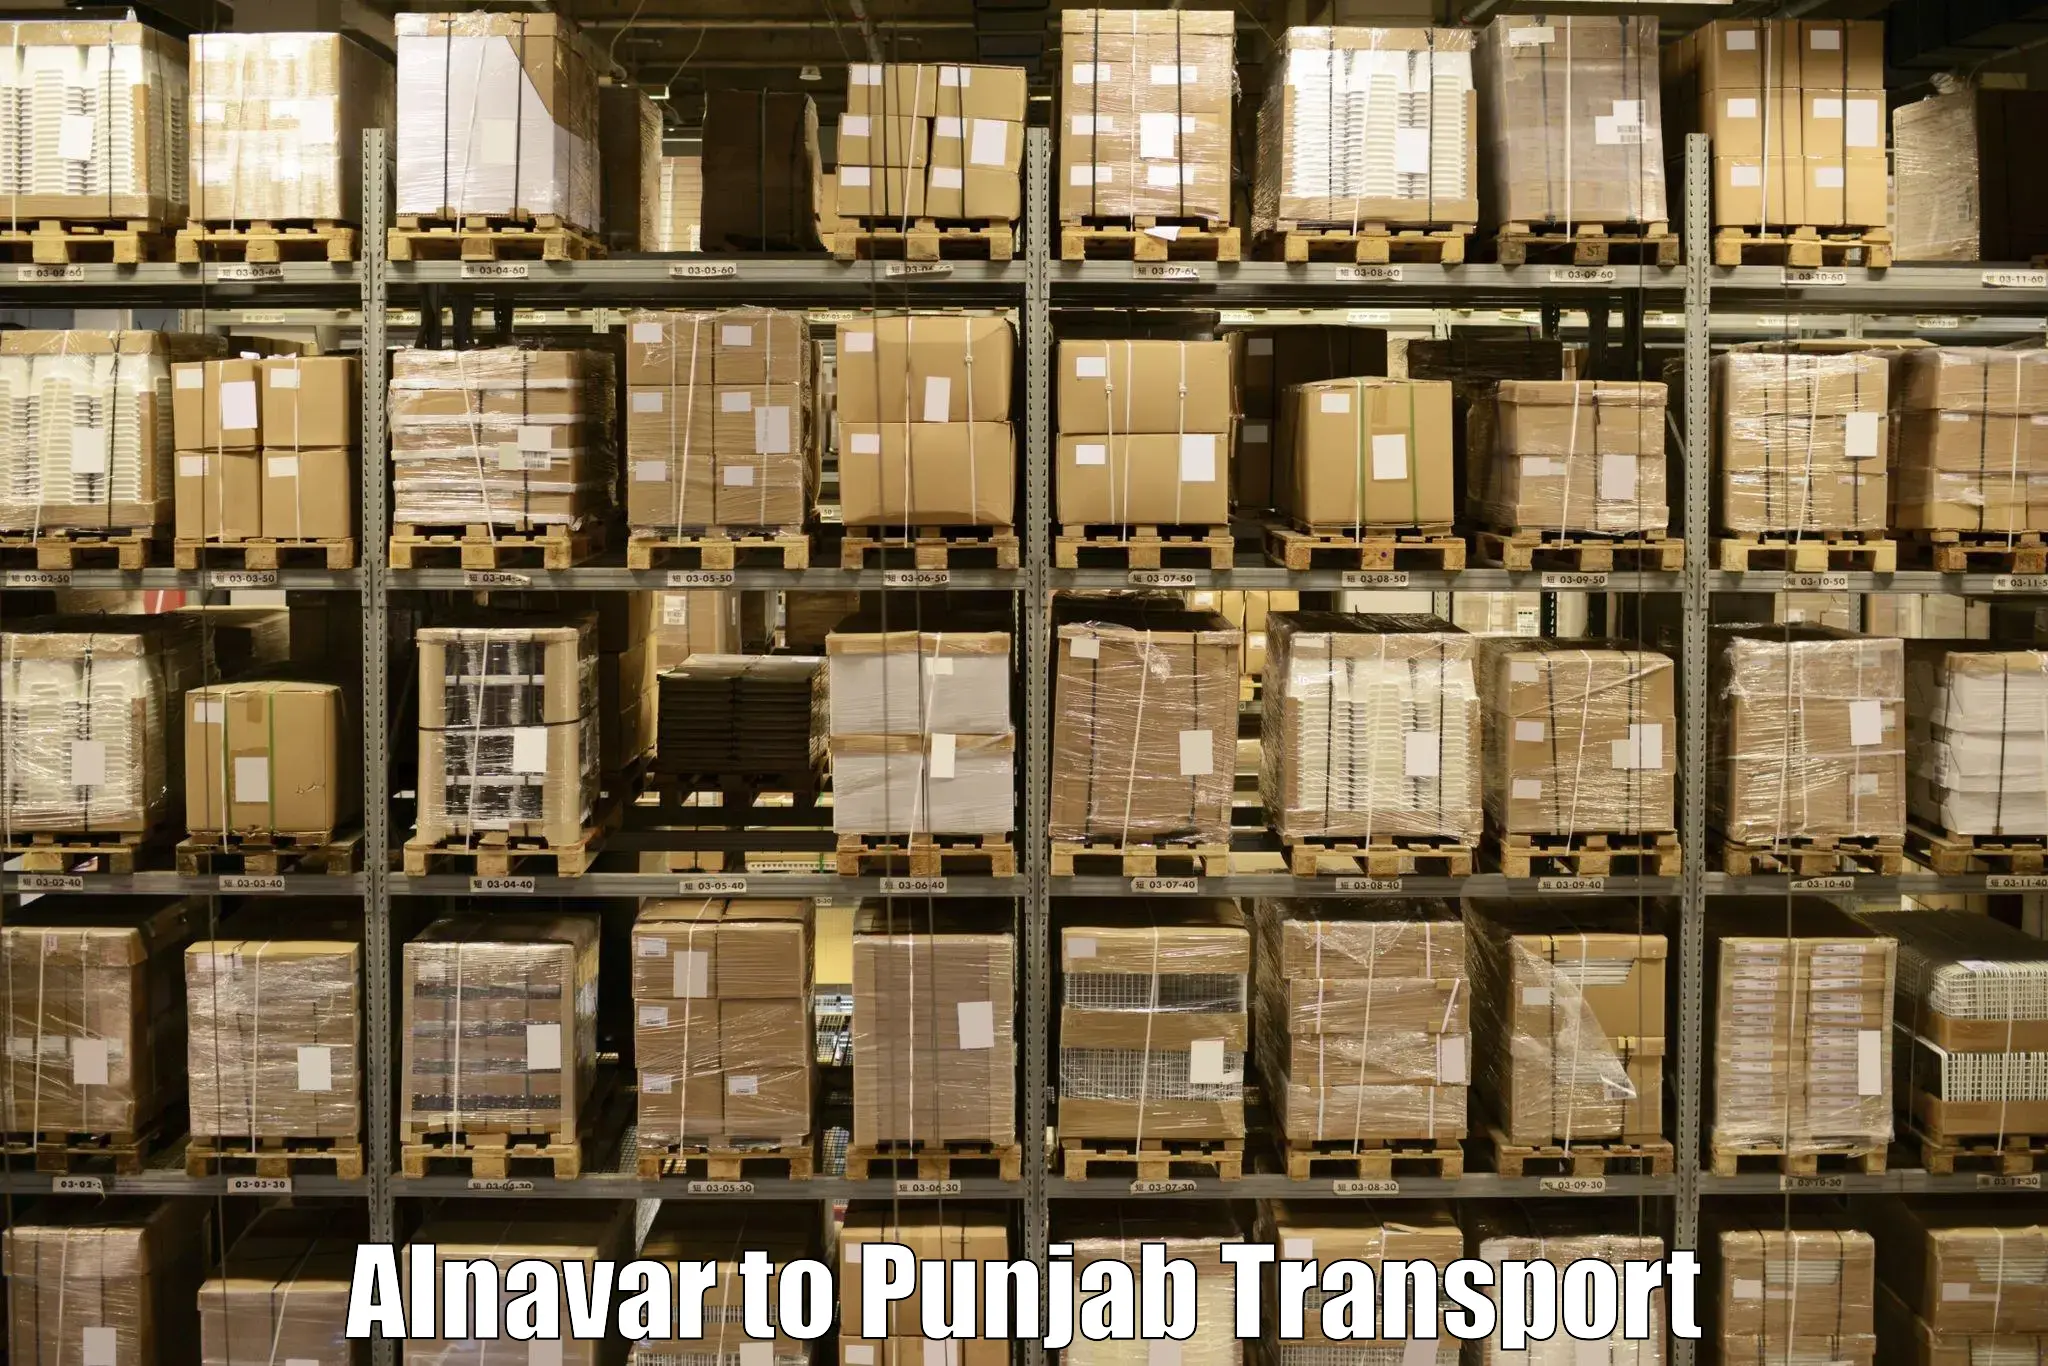 Shipping partner Alnavar to Punjab